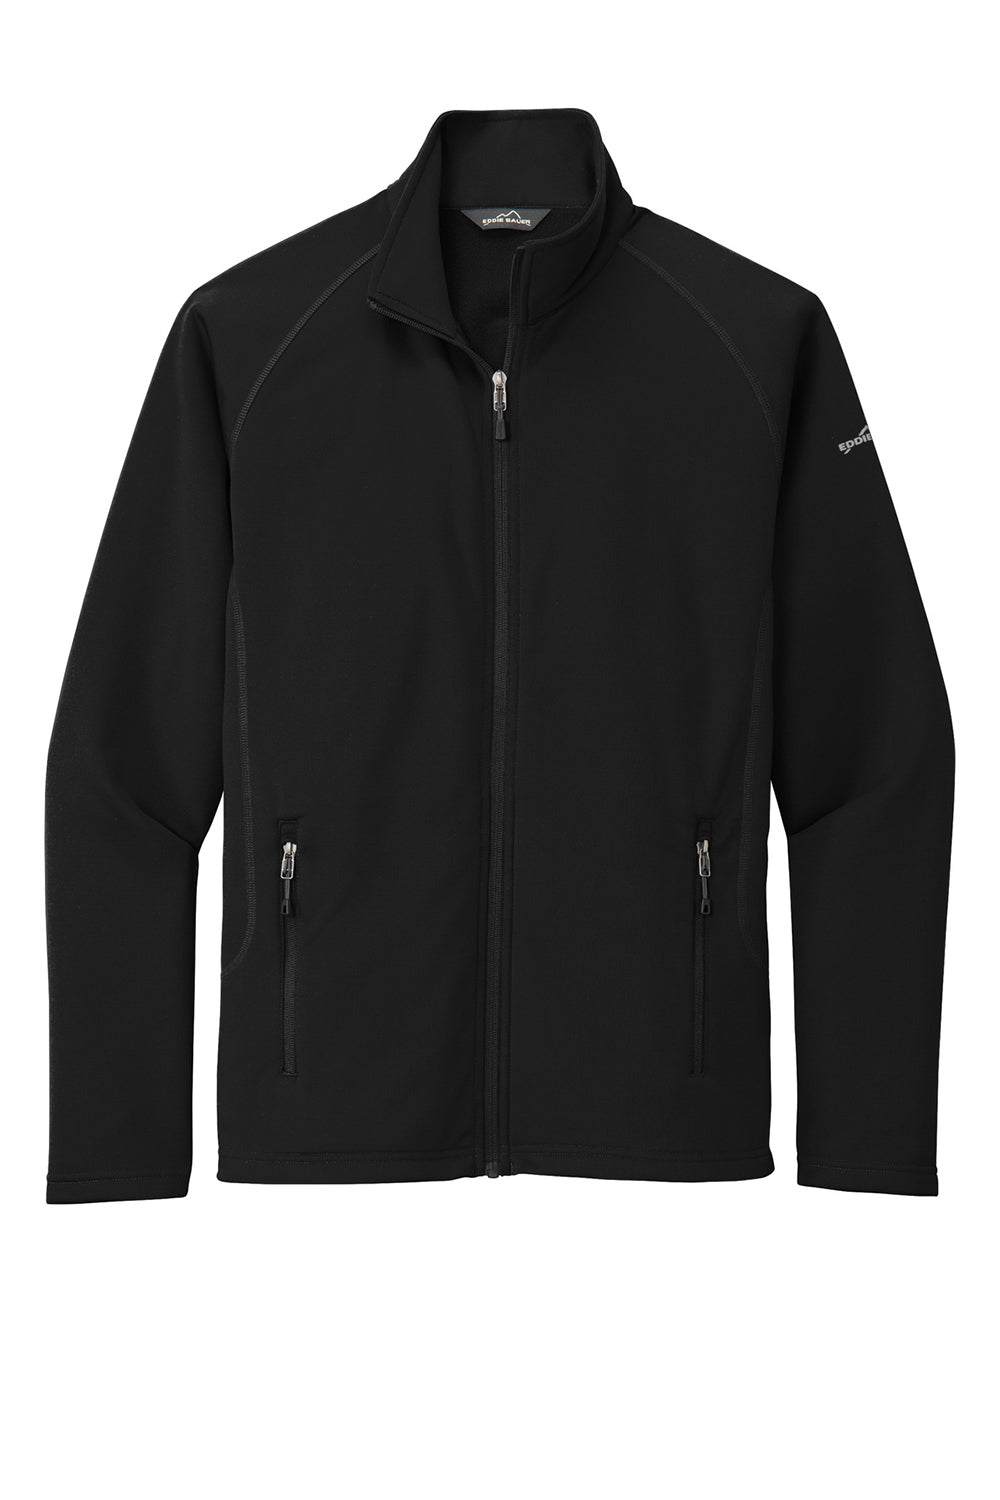 Eddie Bauer EB246 Mens Fleece Full Zip Jacket Black Flat Front